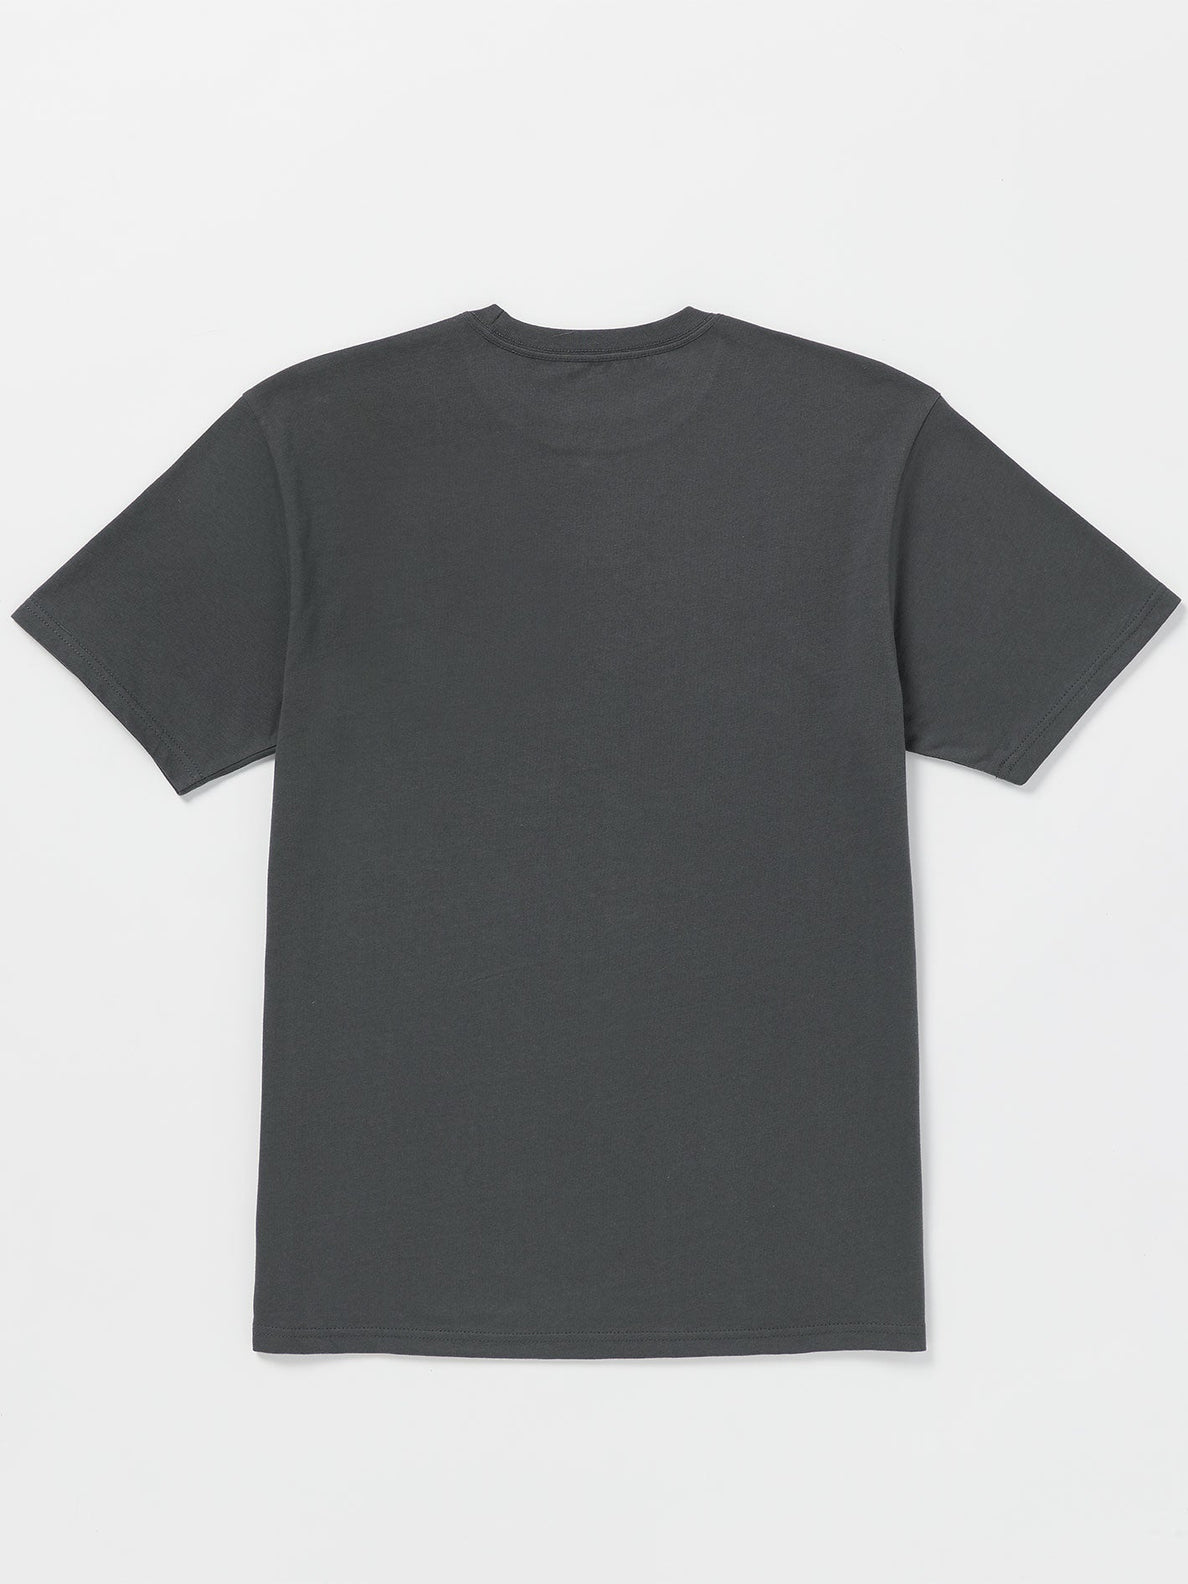 Benny Crew Short Sleeve Shirt - Asphalt Black